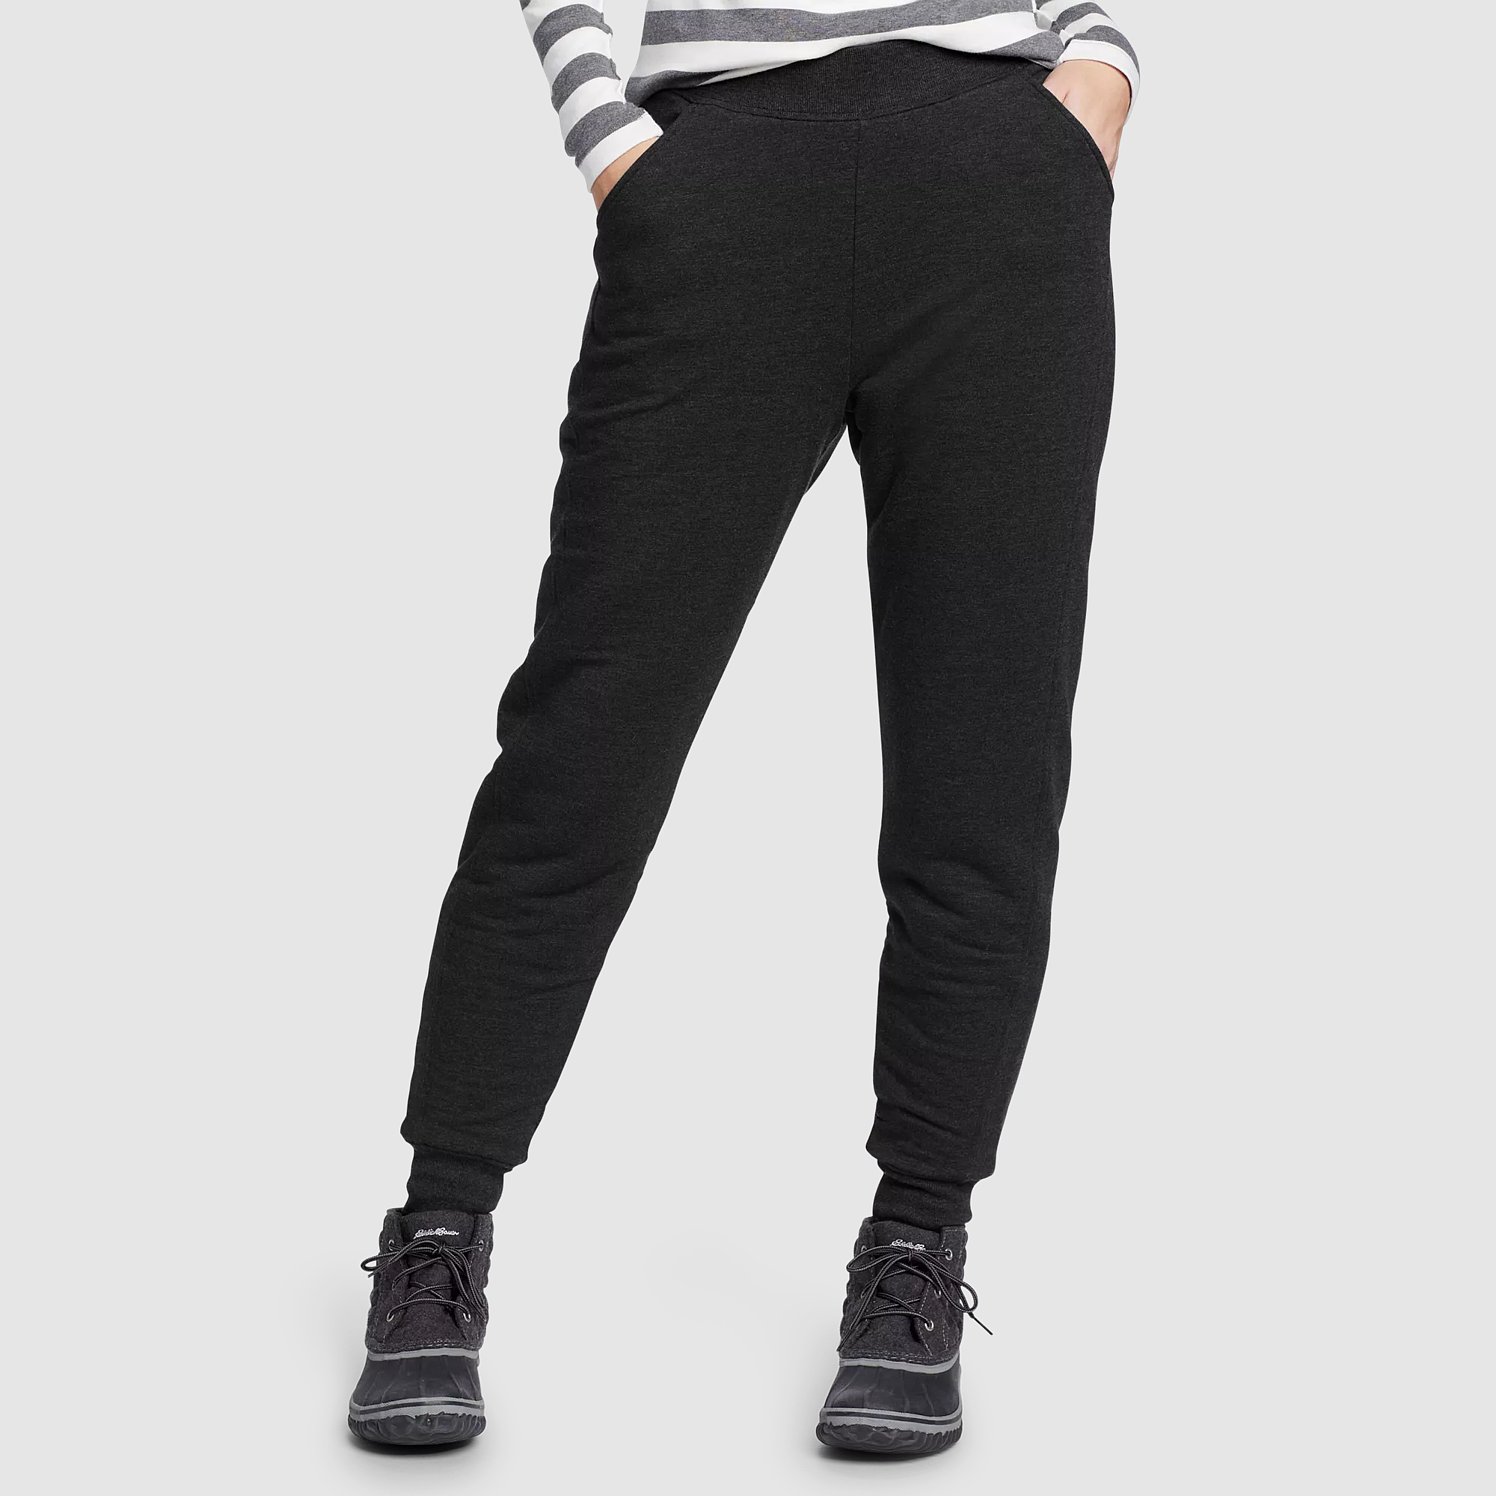 Yyeselk Women's Sherpa Lined Sweatpants Plus Size Drawstring Athletic  Jogger Fleece Pants Winter Warm Trousers with Pockets Gray Large 